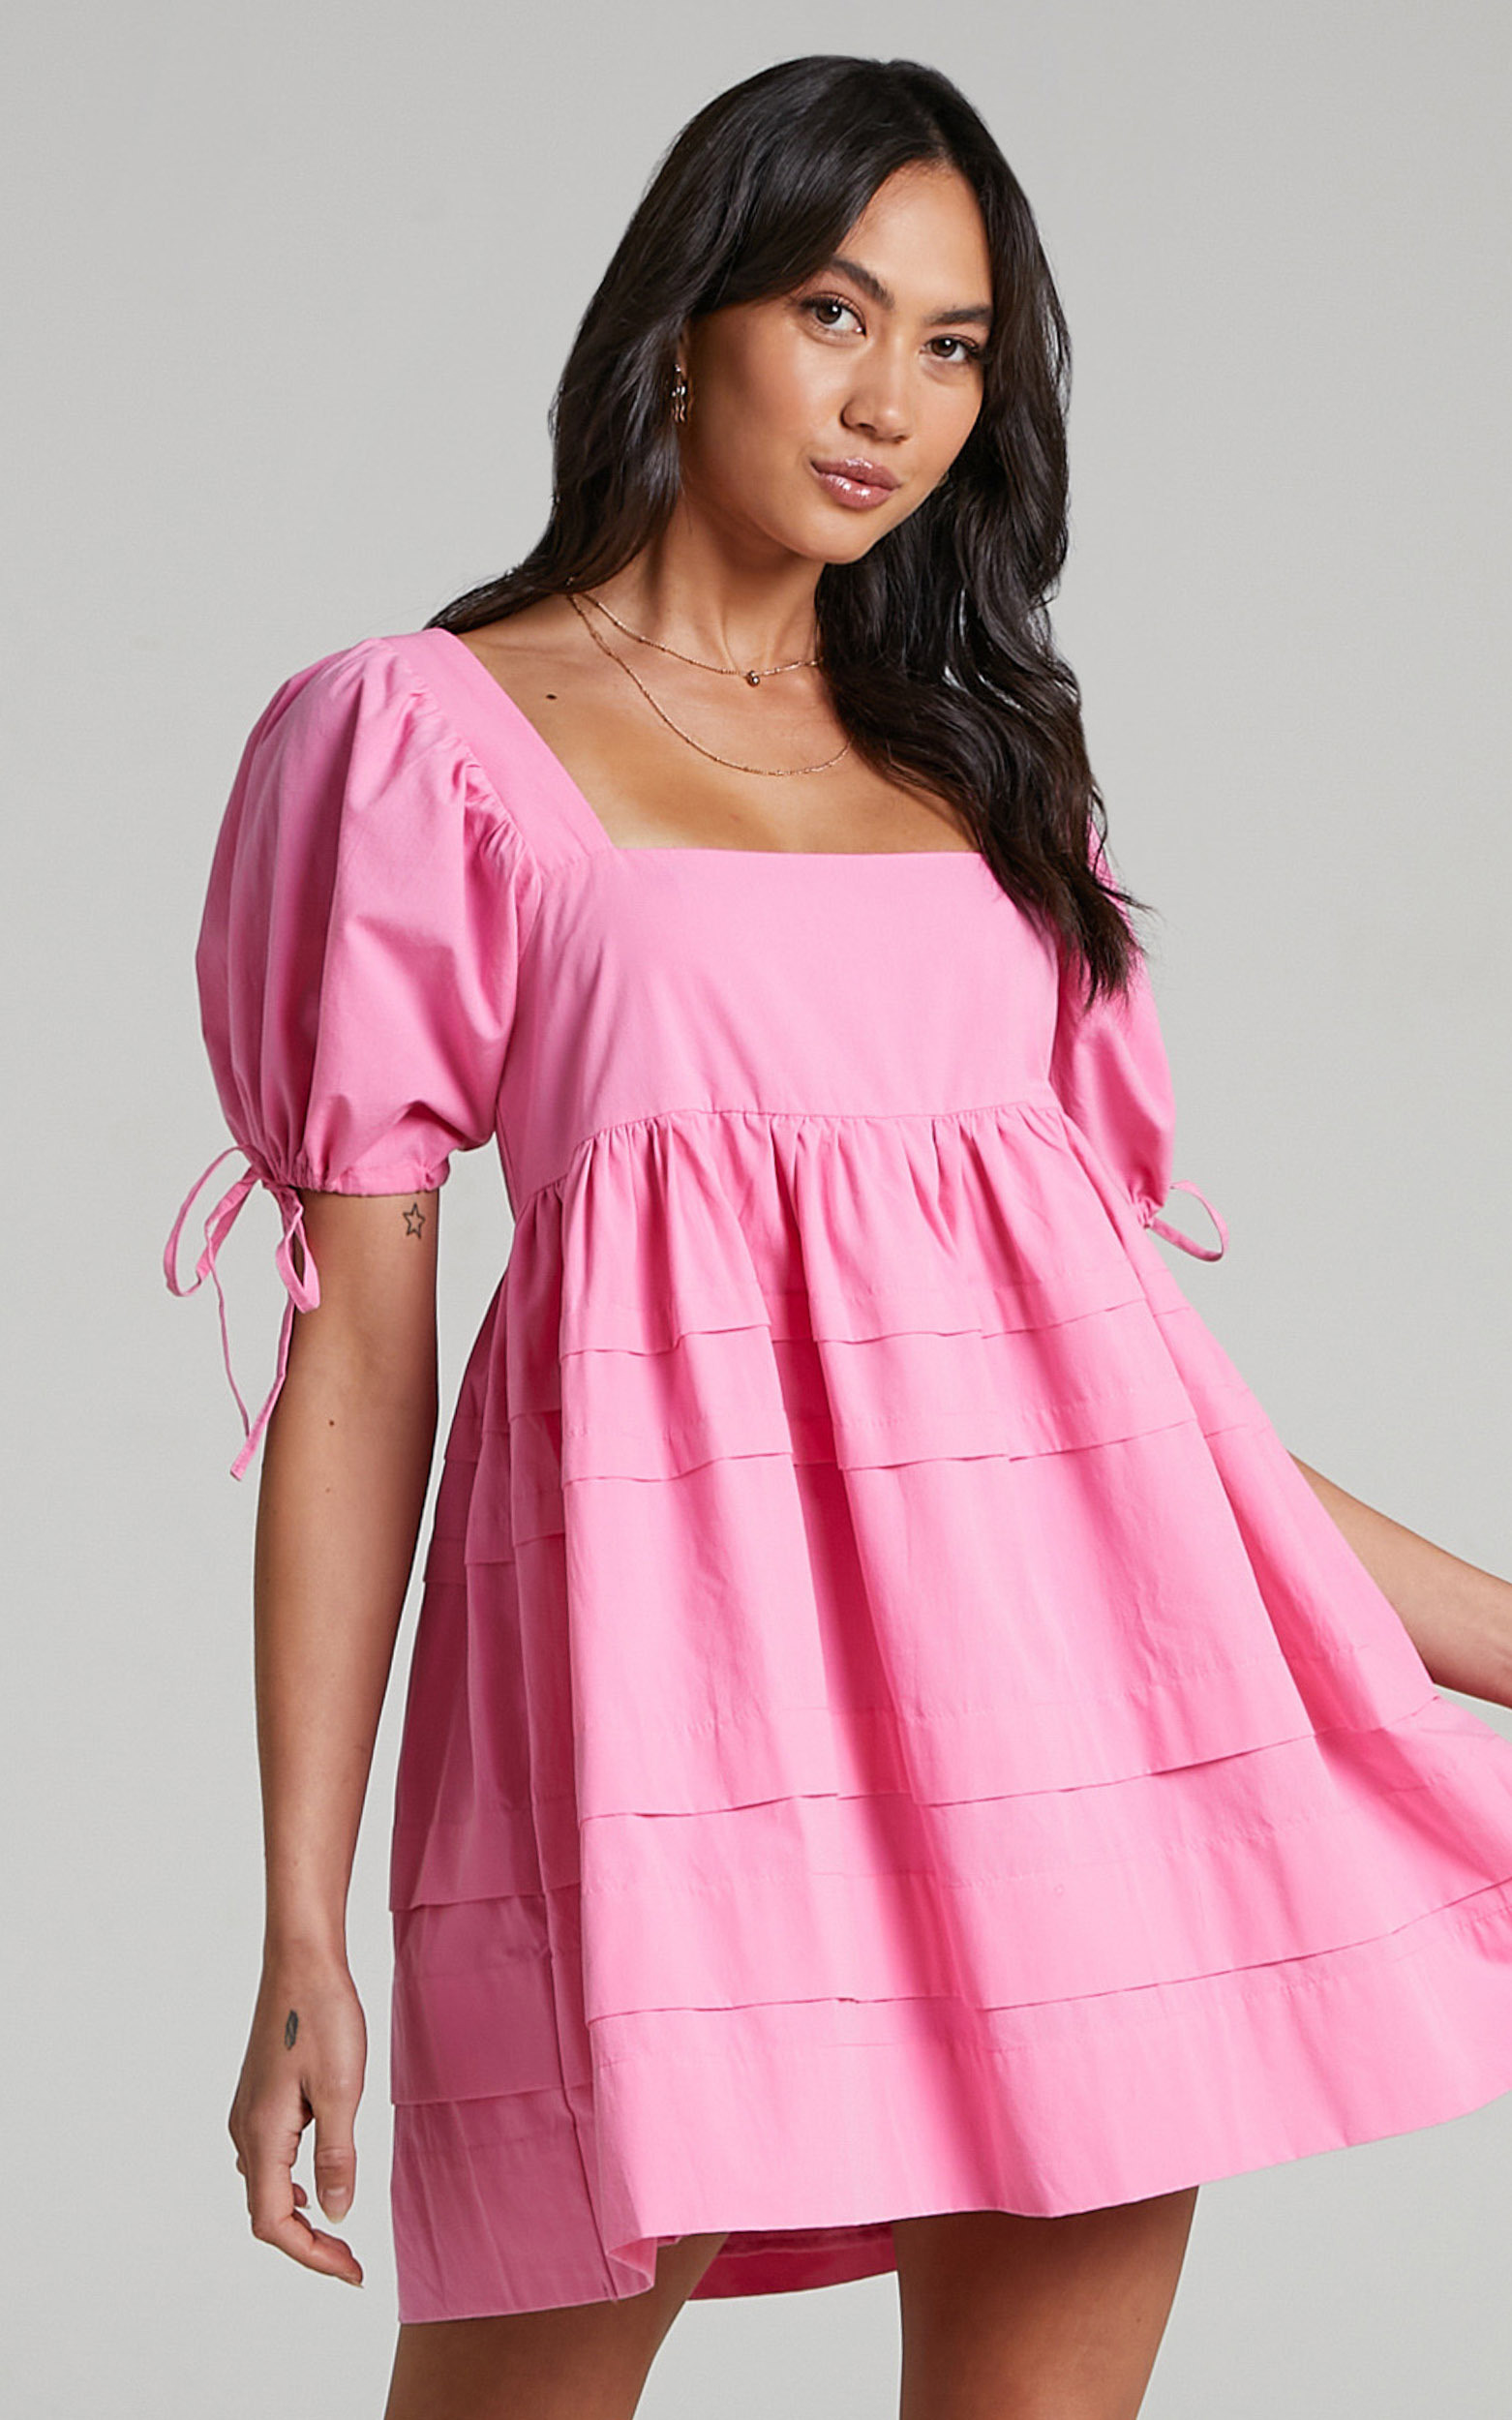 Eleua Pin Tuck Short Puff Sleeve Mini Dress in Pink - 04, PNK2, hi-res image number null